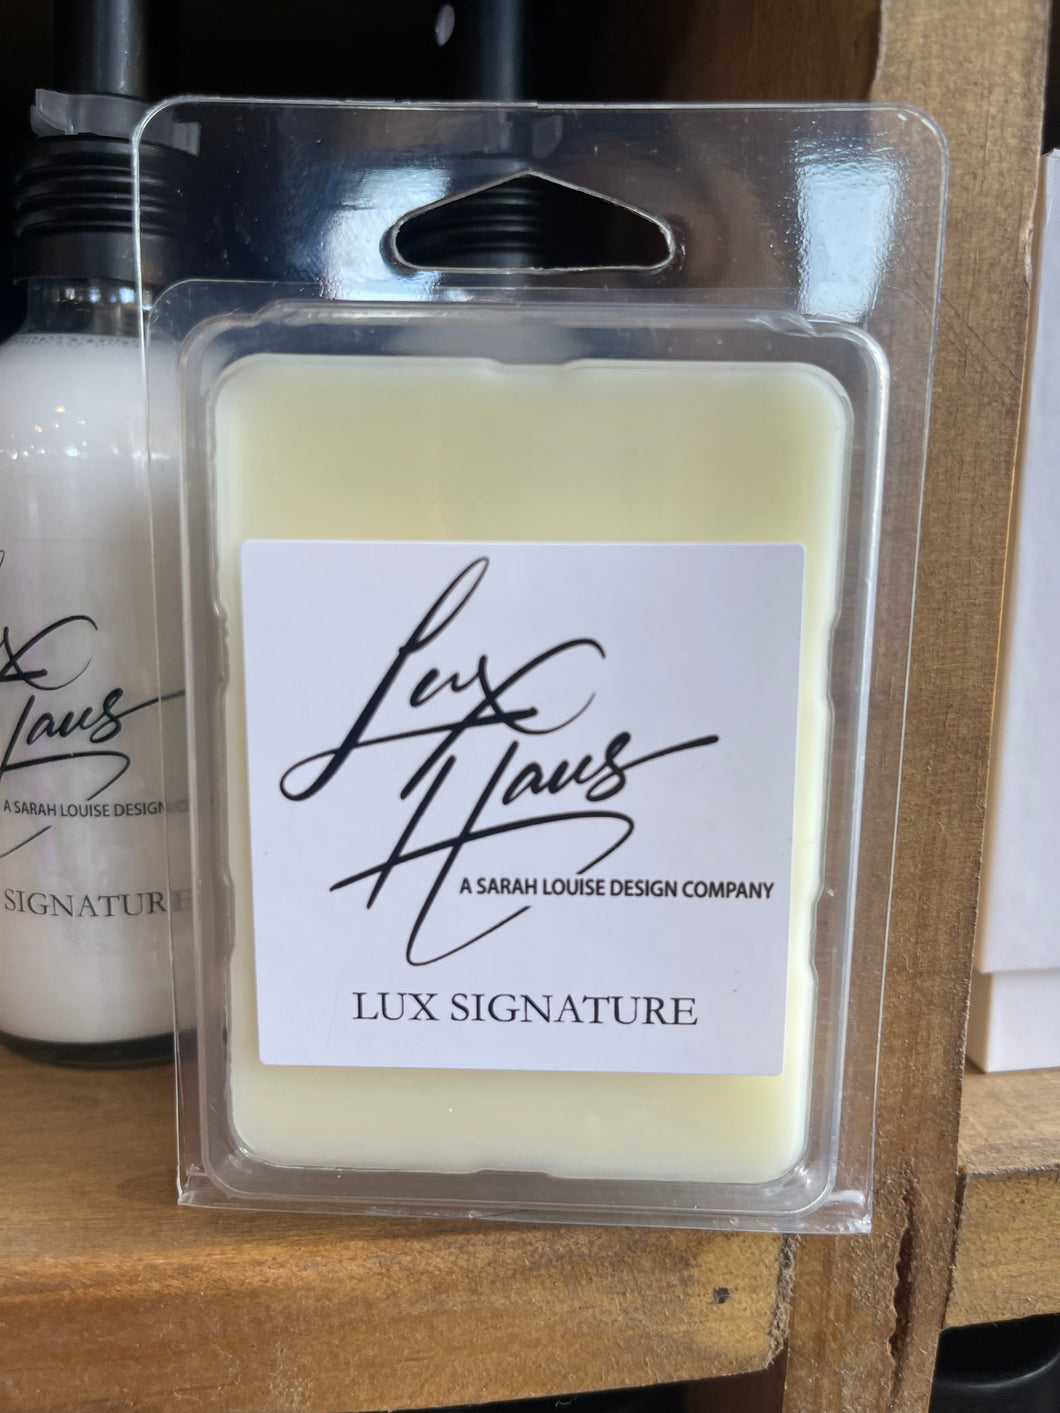 Lux Haus signature wax melts